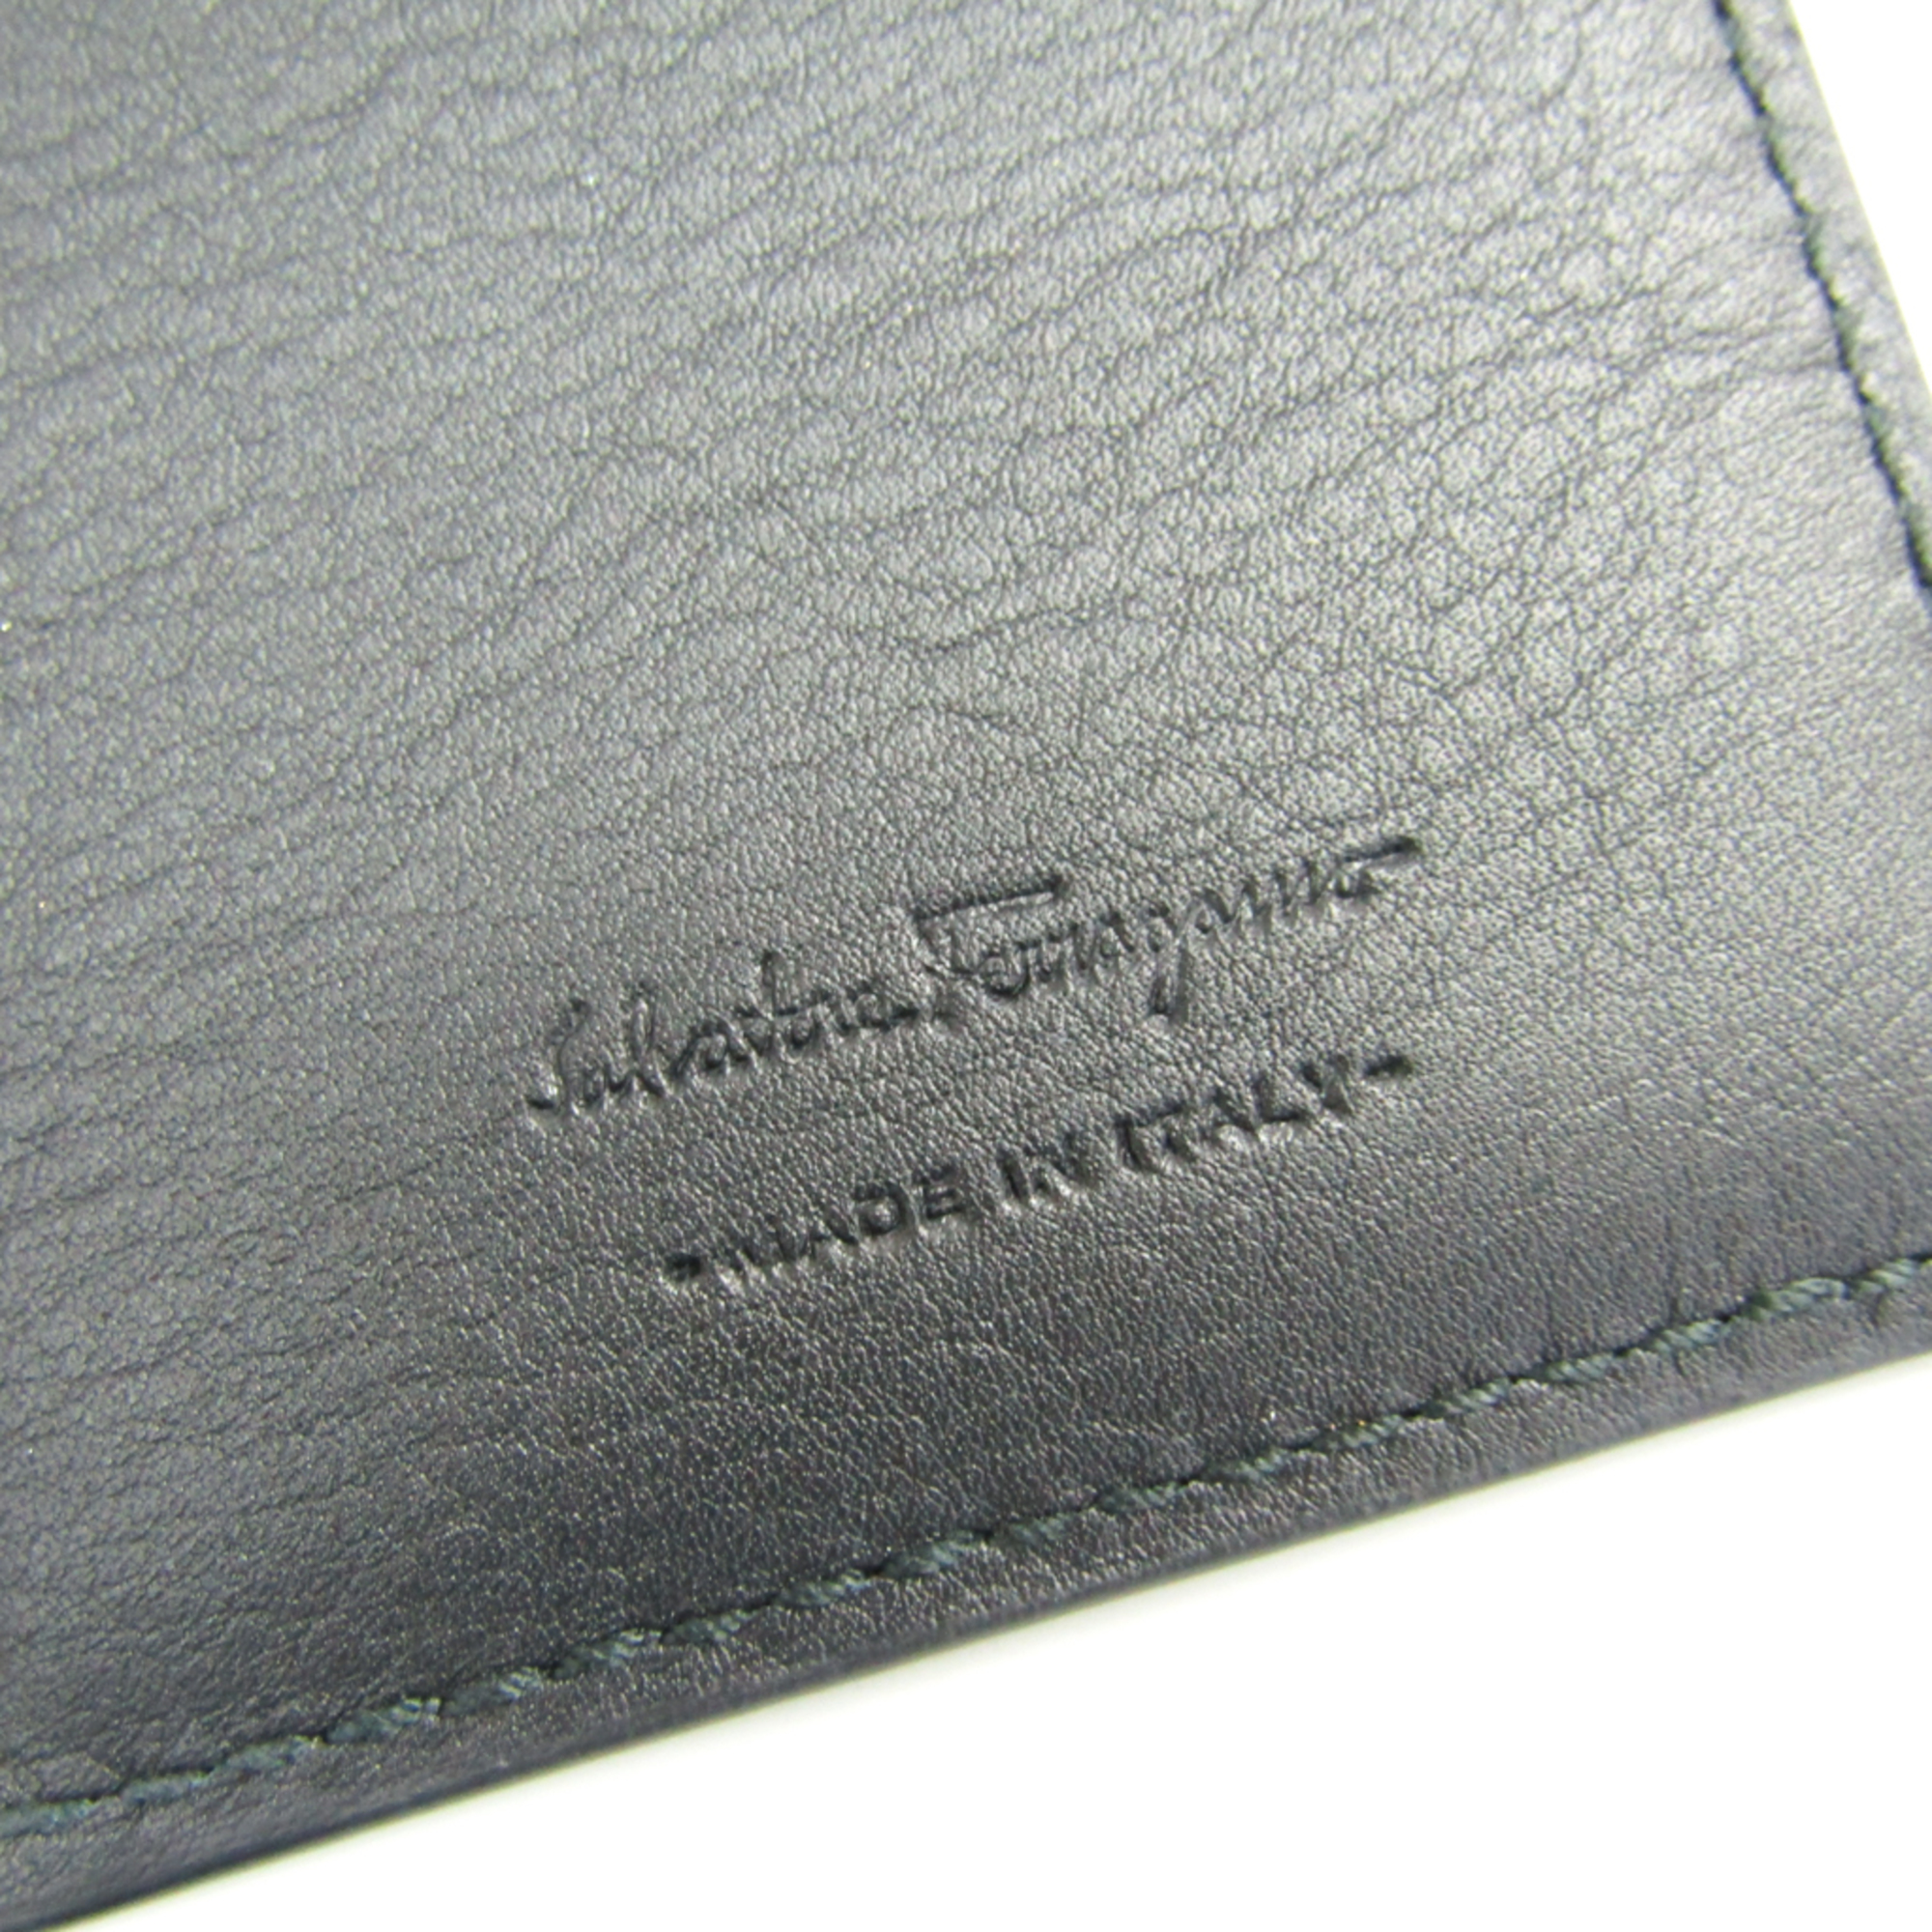 Salvatore Ferragamo Gancini 66 0732 Leather Card Case Black